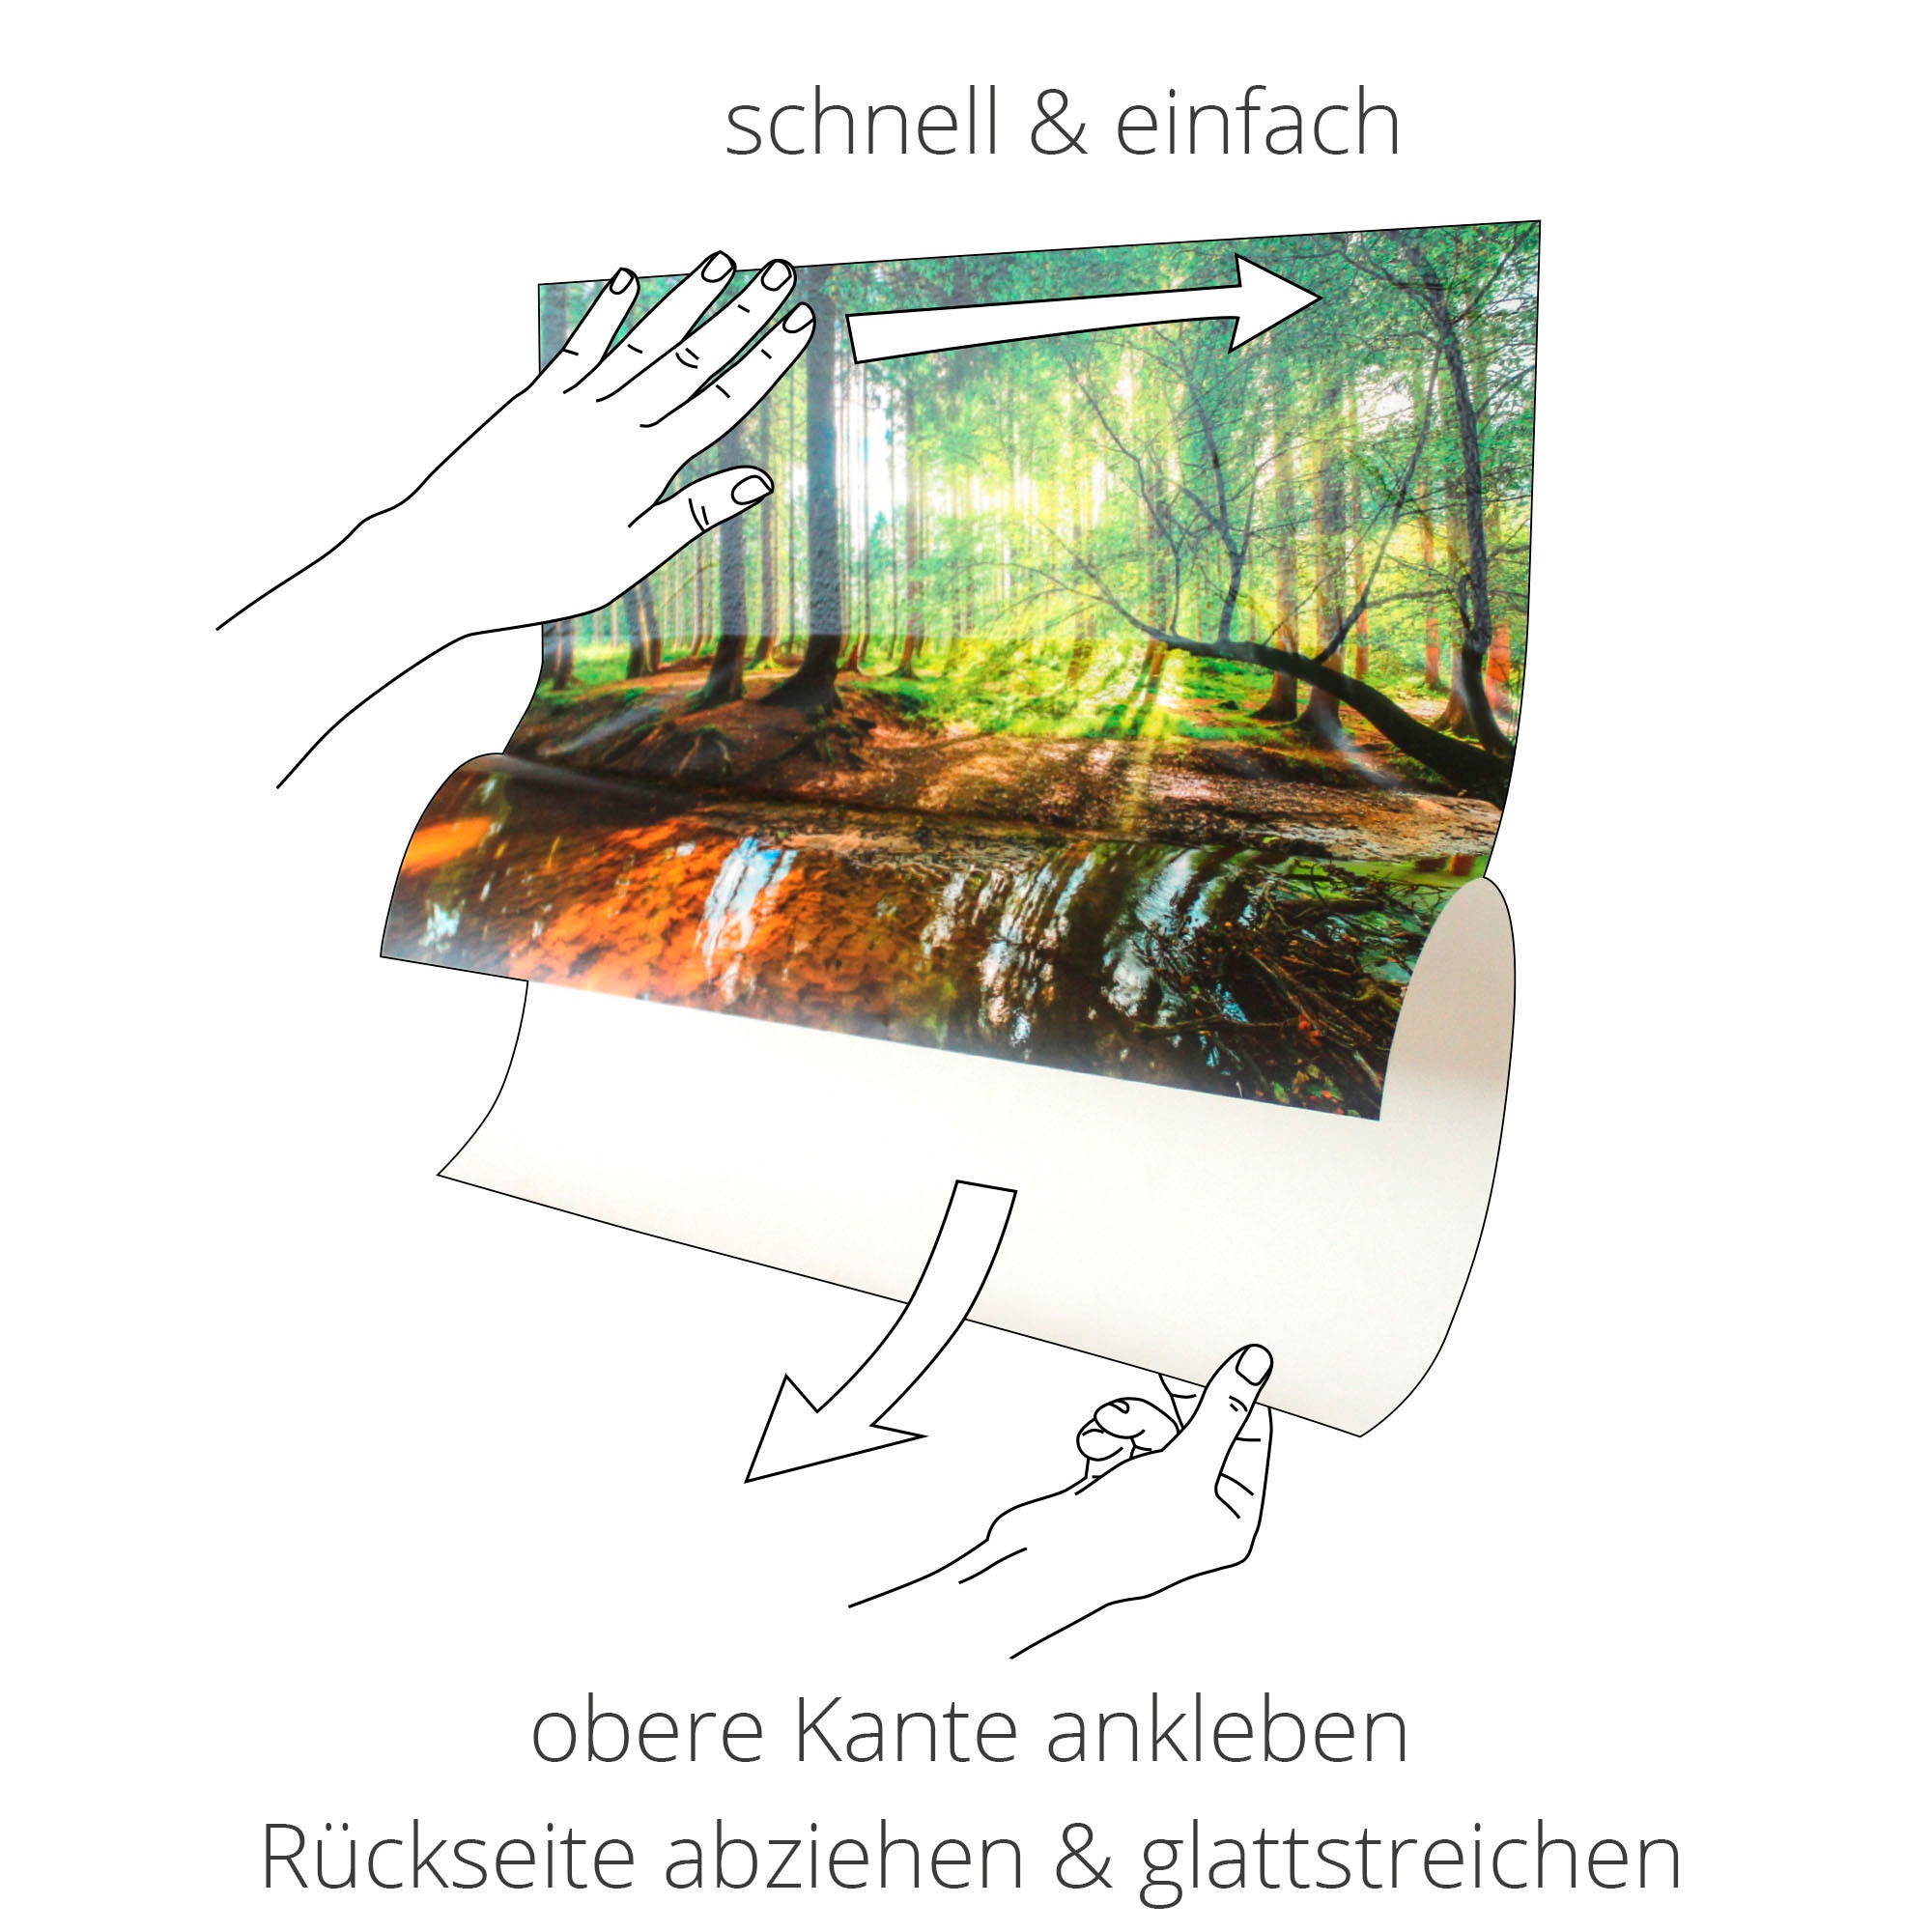 Artland Wandbild »Grüne Blätter reflektieren im Wasser«, Blätter, (1 St.),  als Alubild, Leinwandbild, Wandaufkleber oder Poster in versch. Grössen  jetzt kaufen